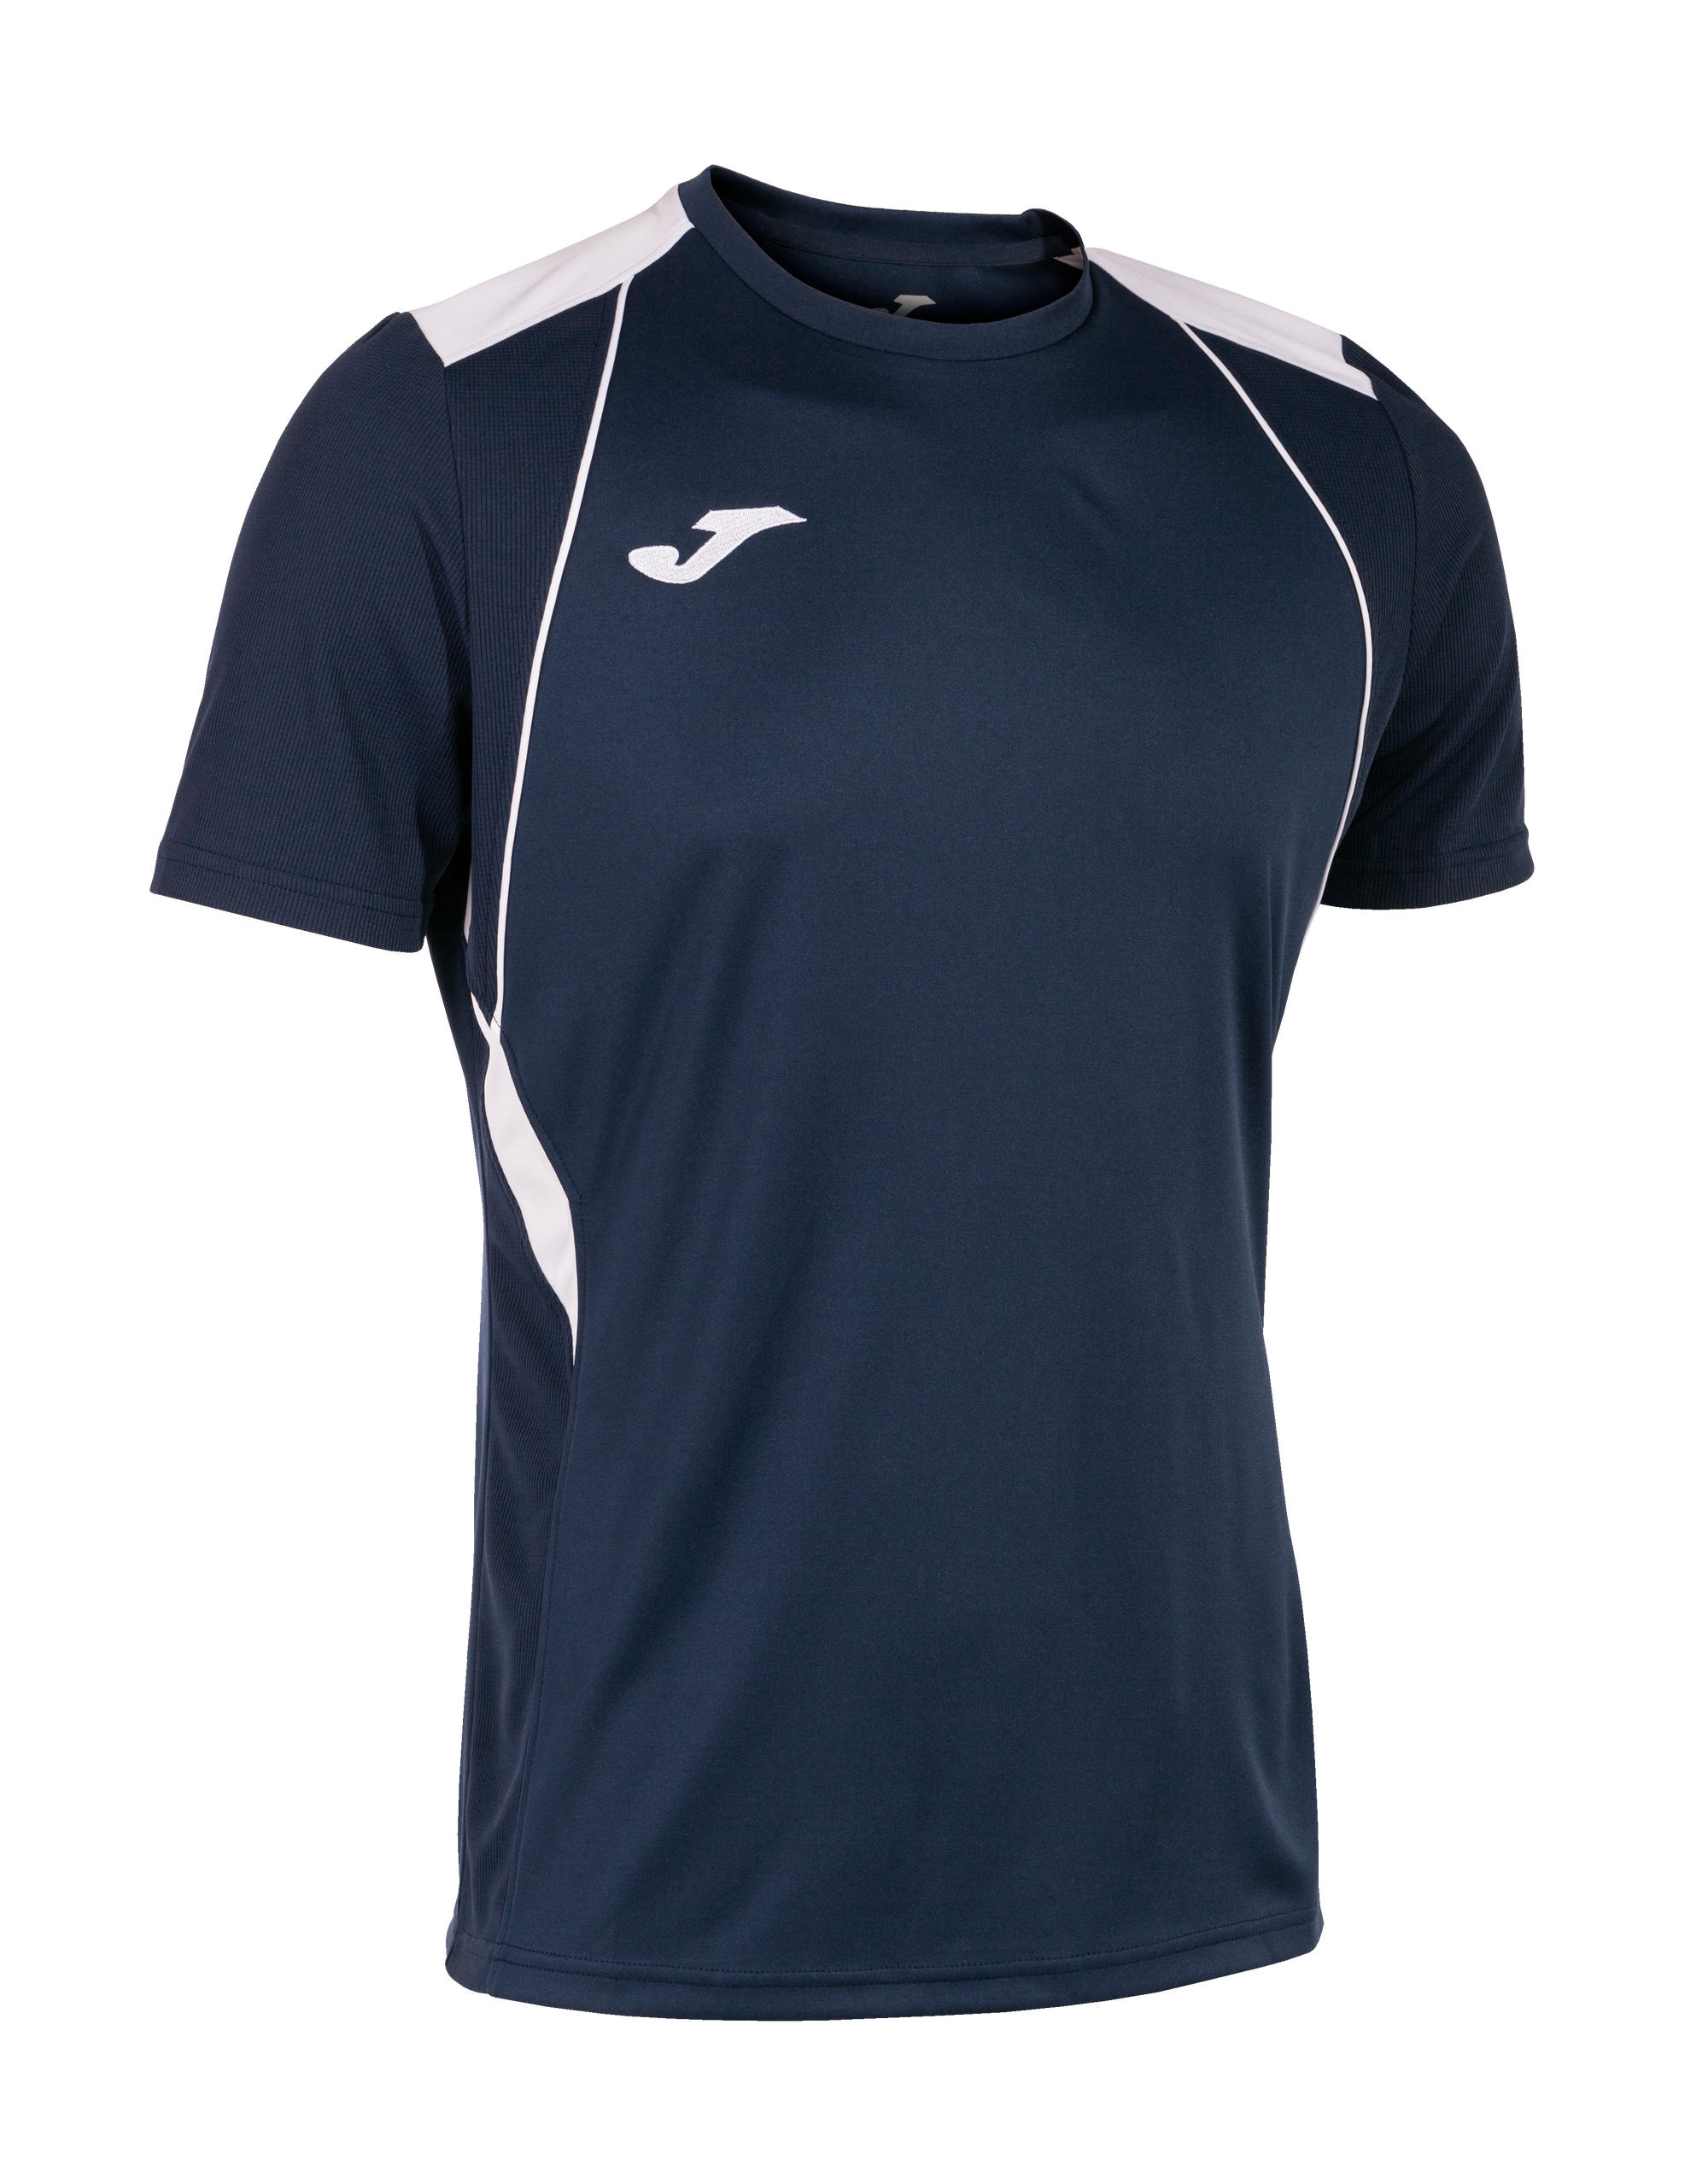 Joma Championship VII Short Sleeve T-Shirt - Dark Navy/White